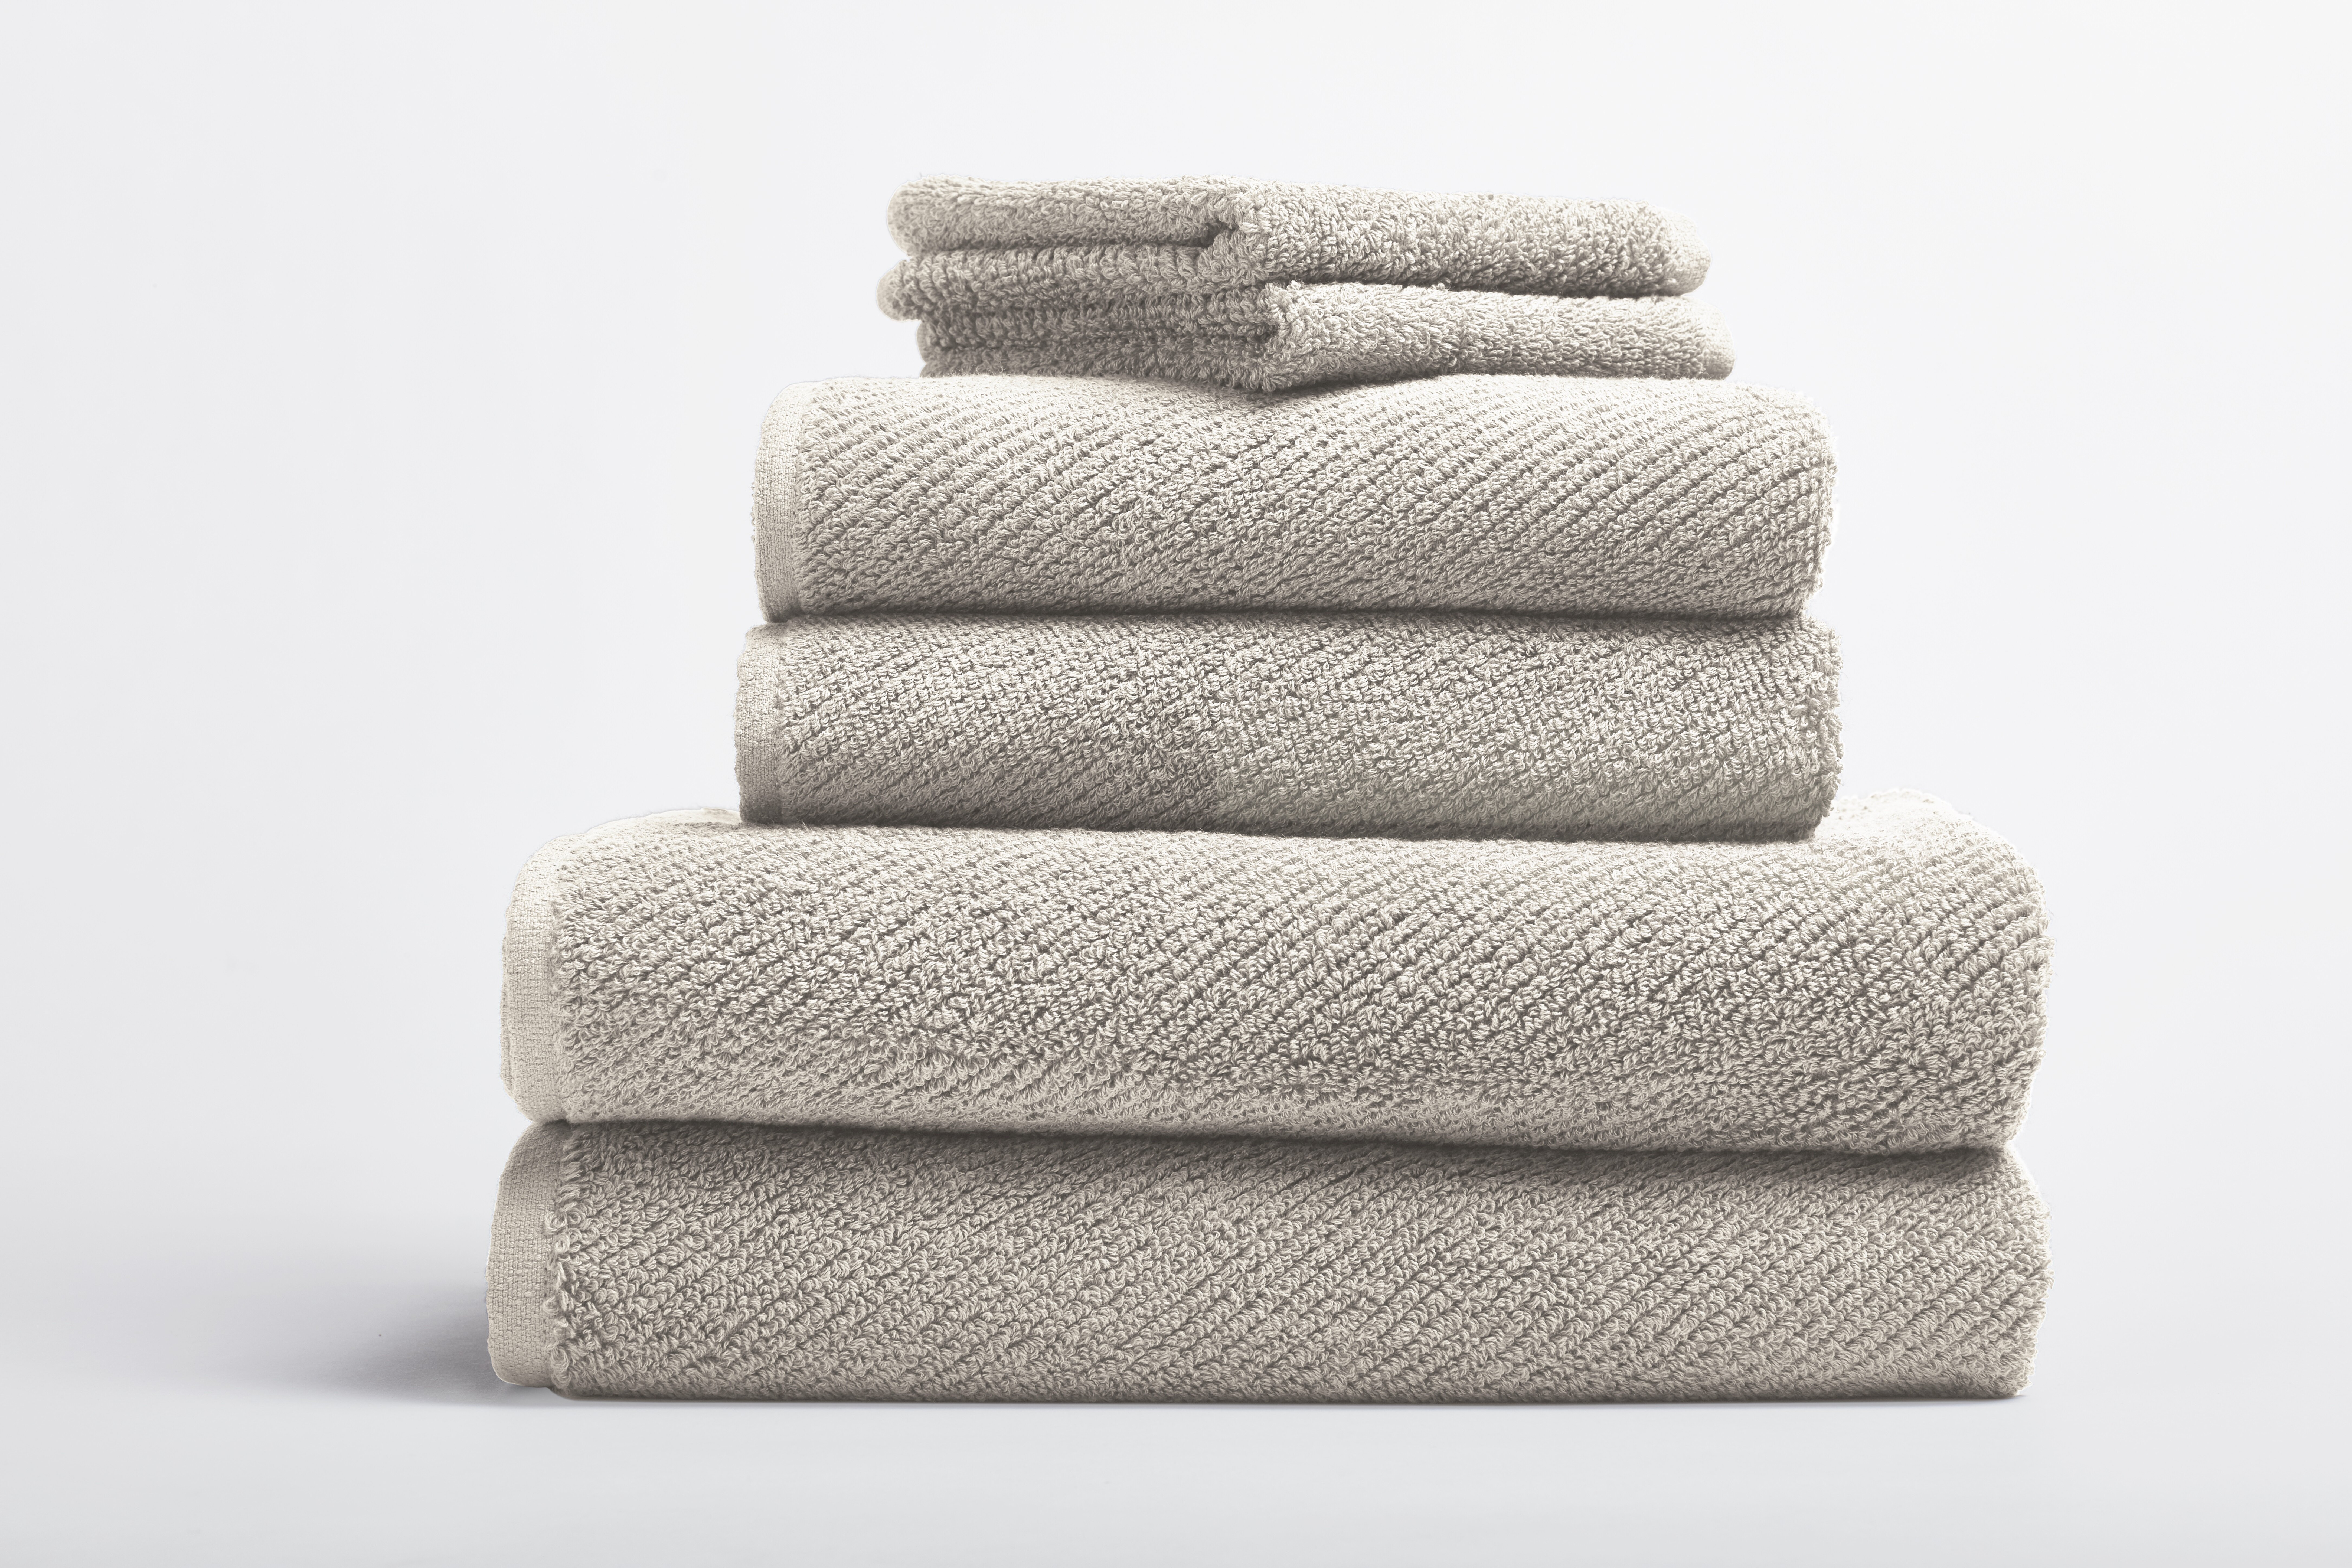 Home :: The House :: Household Supplies :: Organic Towels Set - Dusty Aqua  - Oversized Hand Towel